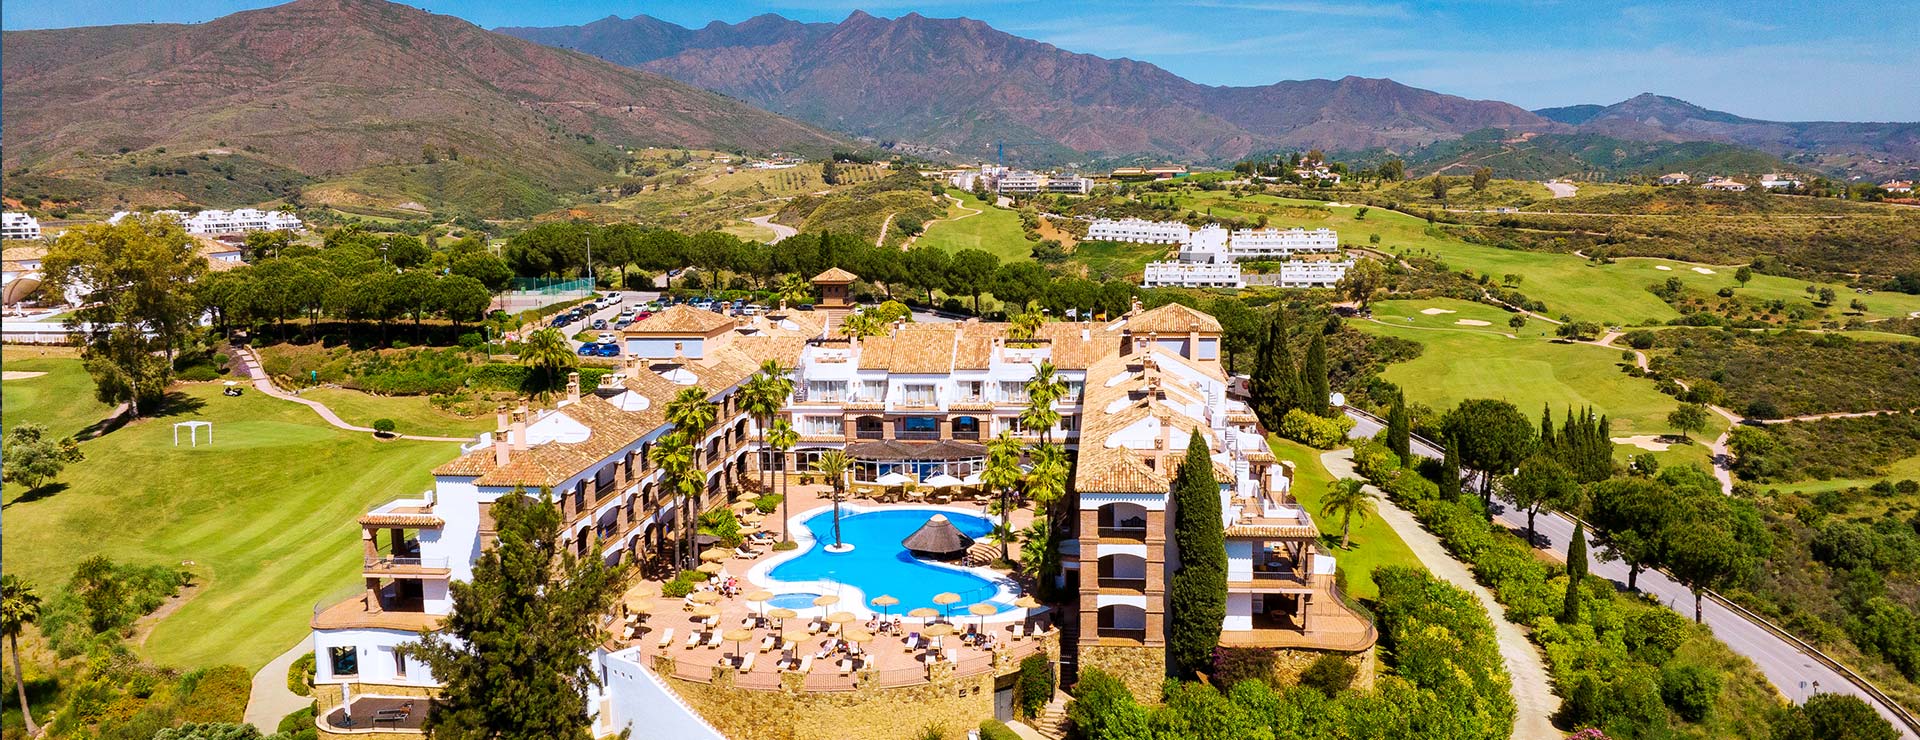 La Cala Resort. Spa and Residential in Costa del Sol, Spain.